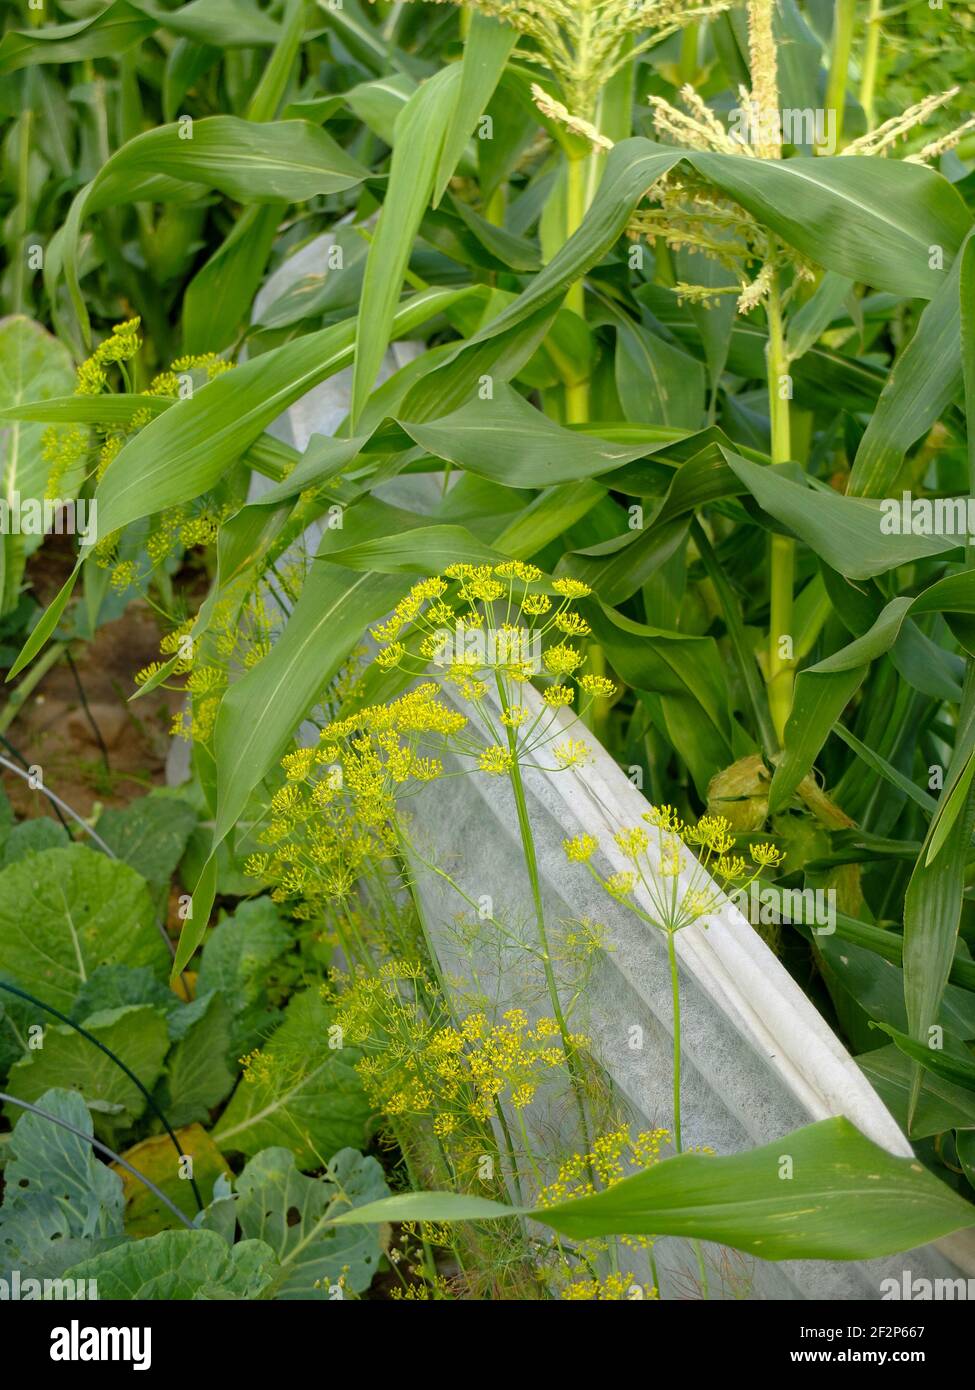 Fleece on the sweet corn protects against bird damage Stock Photo